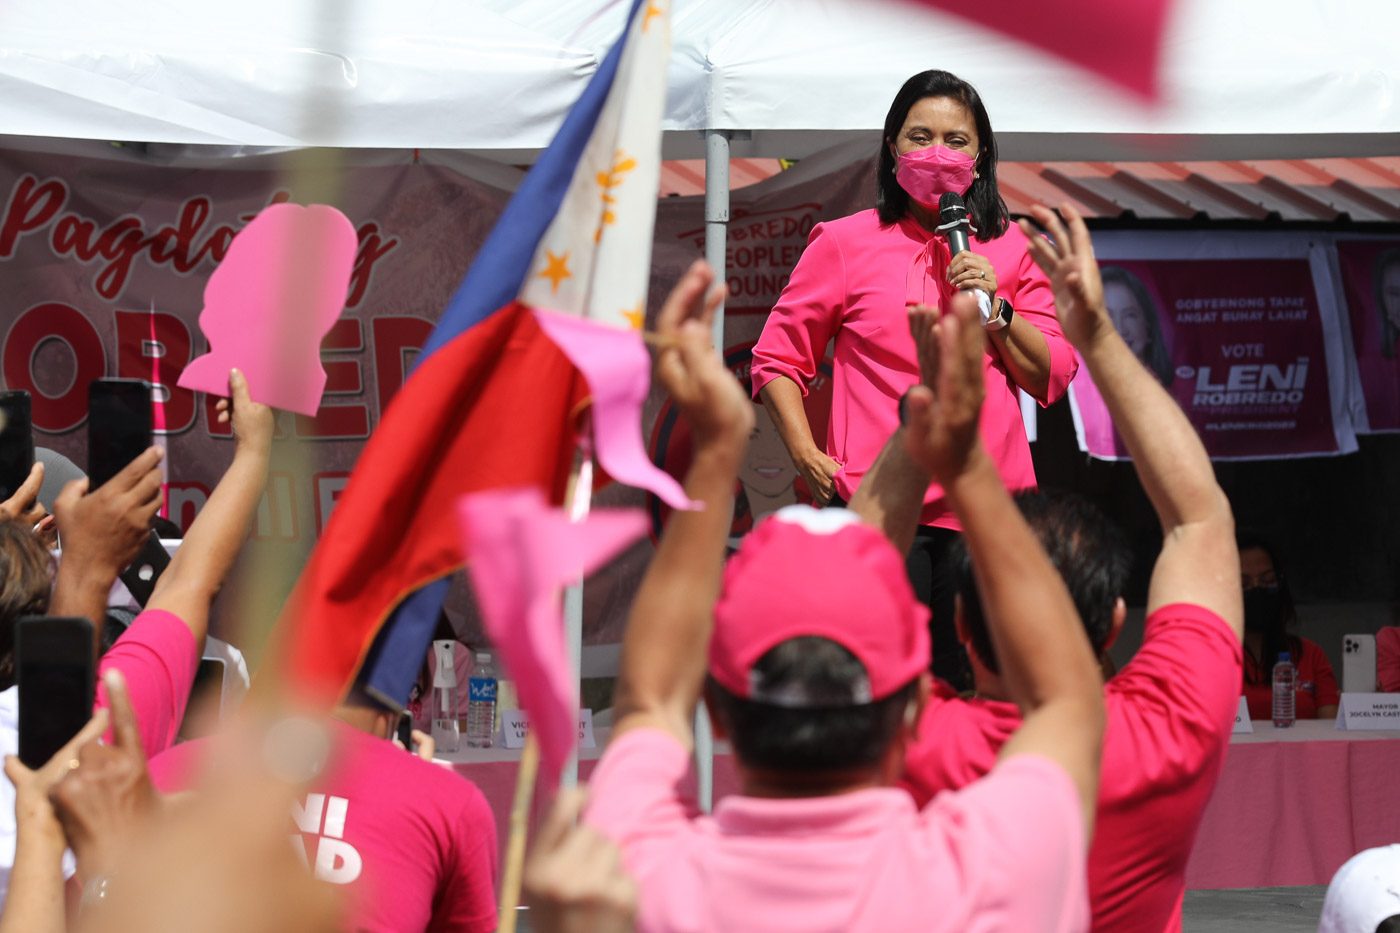 17 former Philippine Bar Association presidents endorse Robredo